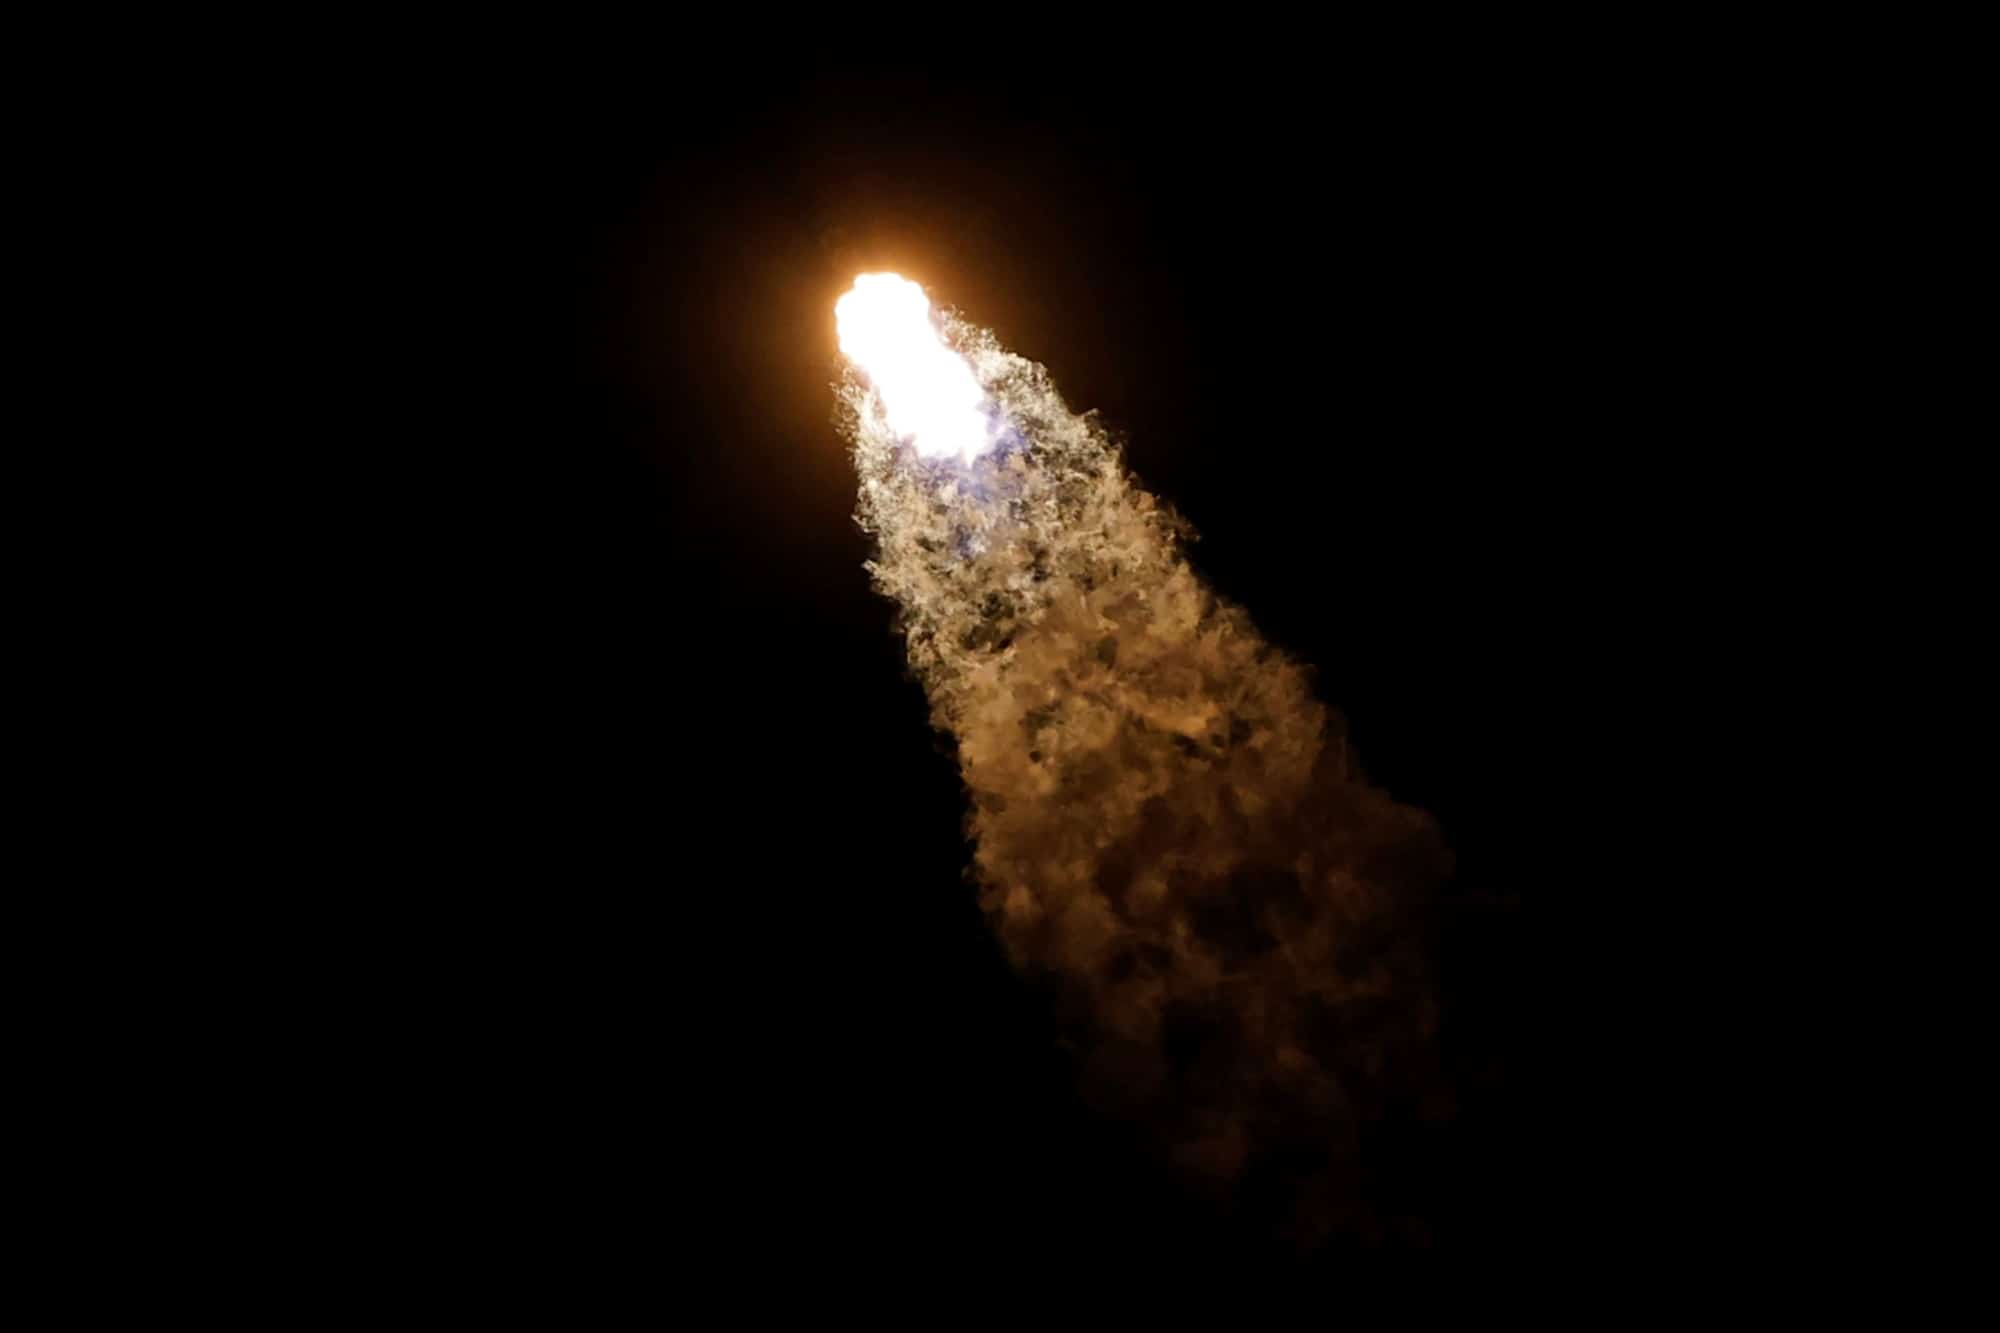 Start rakety SpaceX Falcon 9